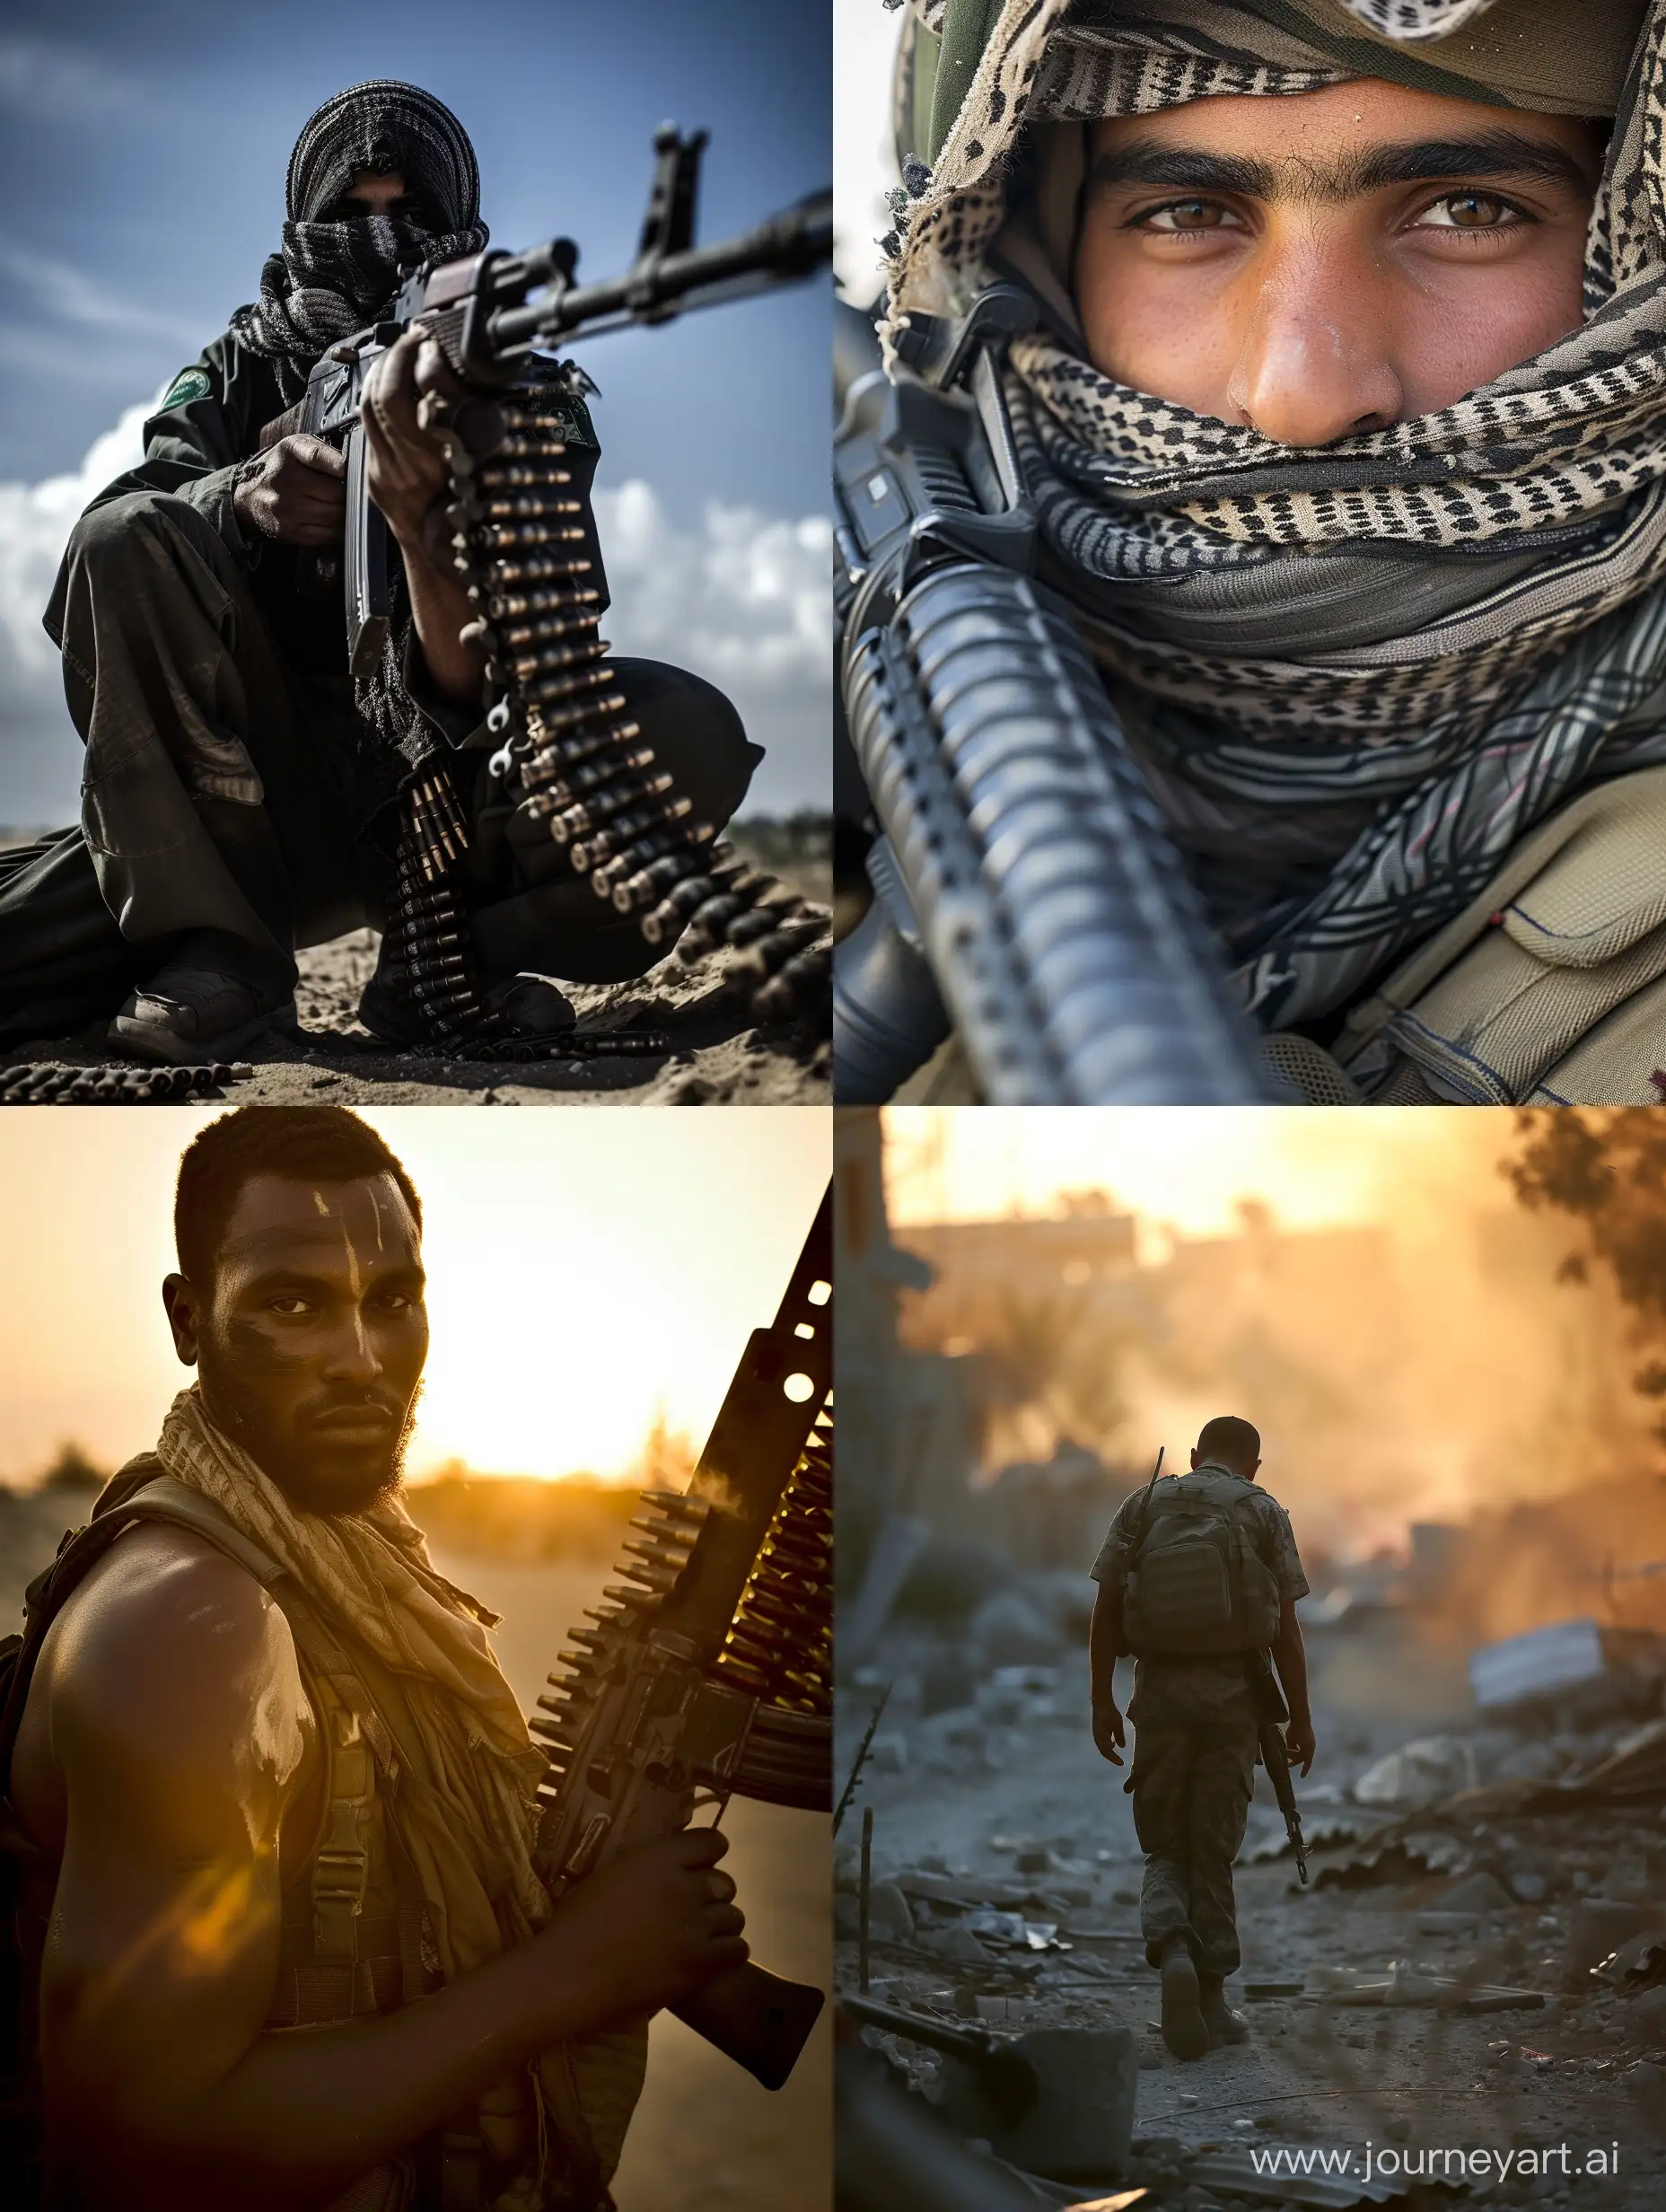 Courageous-Warrior-in-Gaza-Valor-Captured-in-Striking-Image